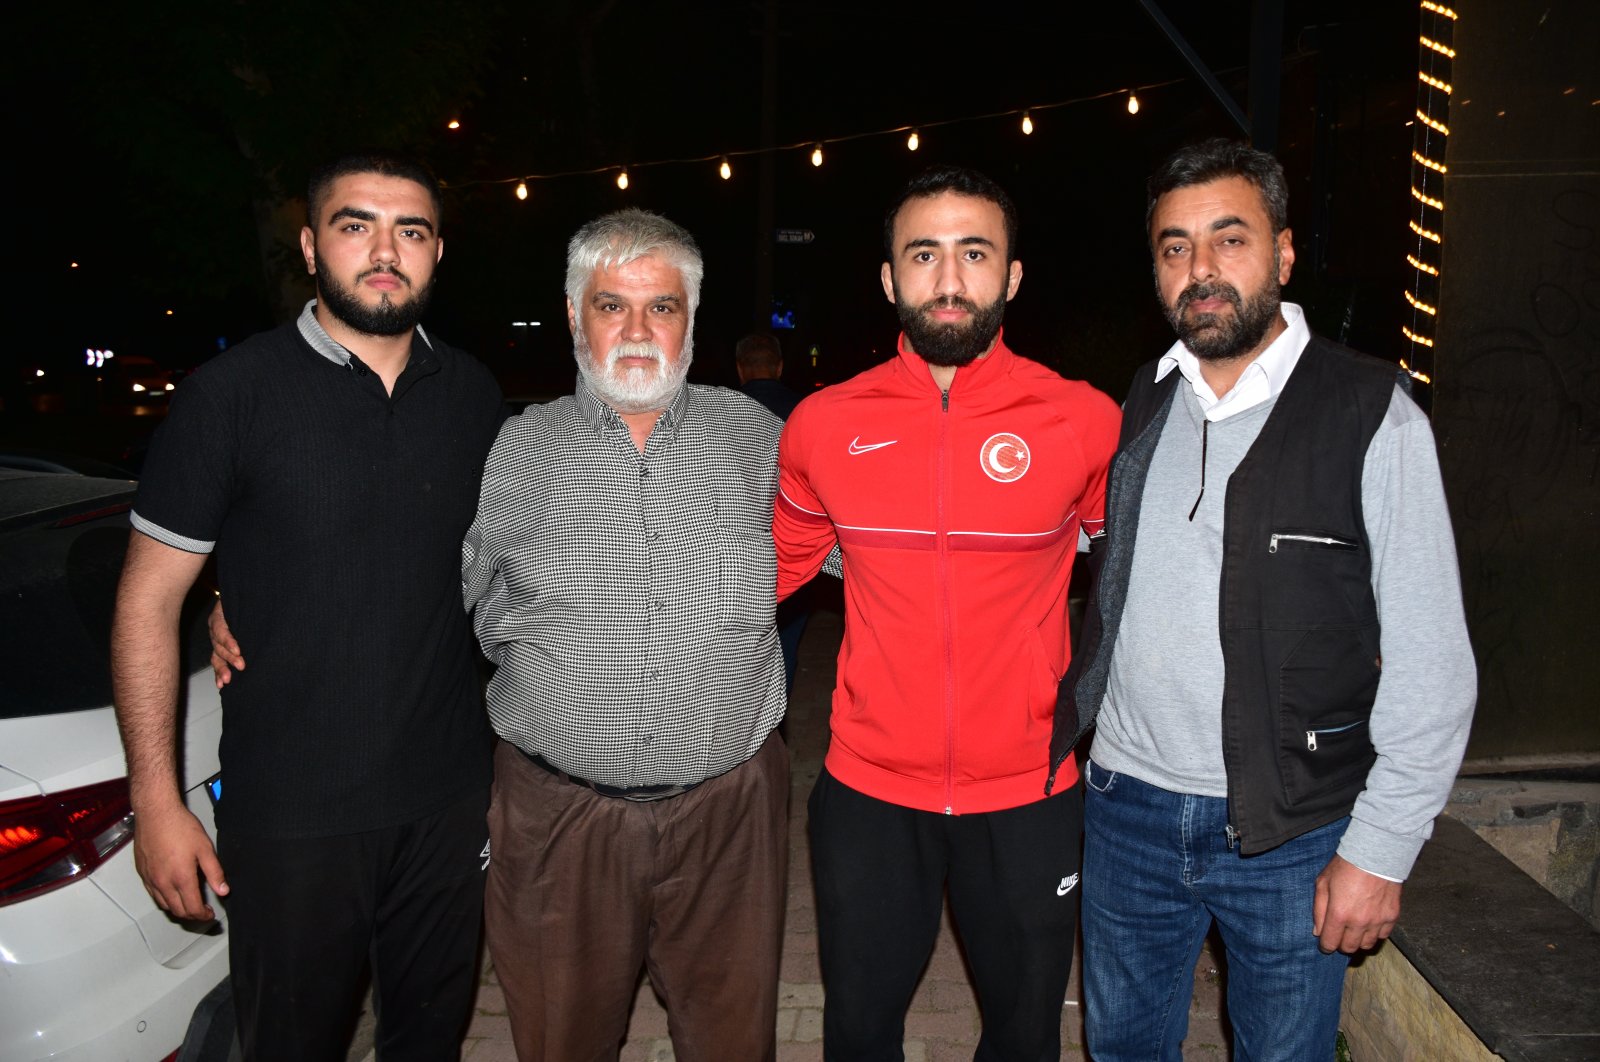 Juara gulat Turki menawarkan dukungan kepada keluarga korban gempa